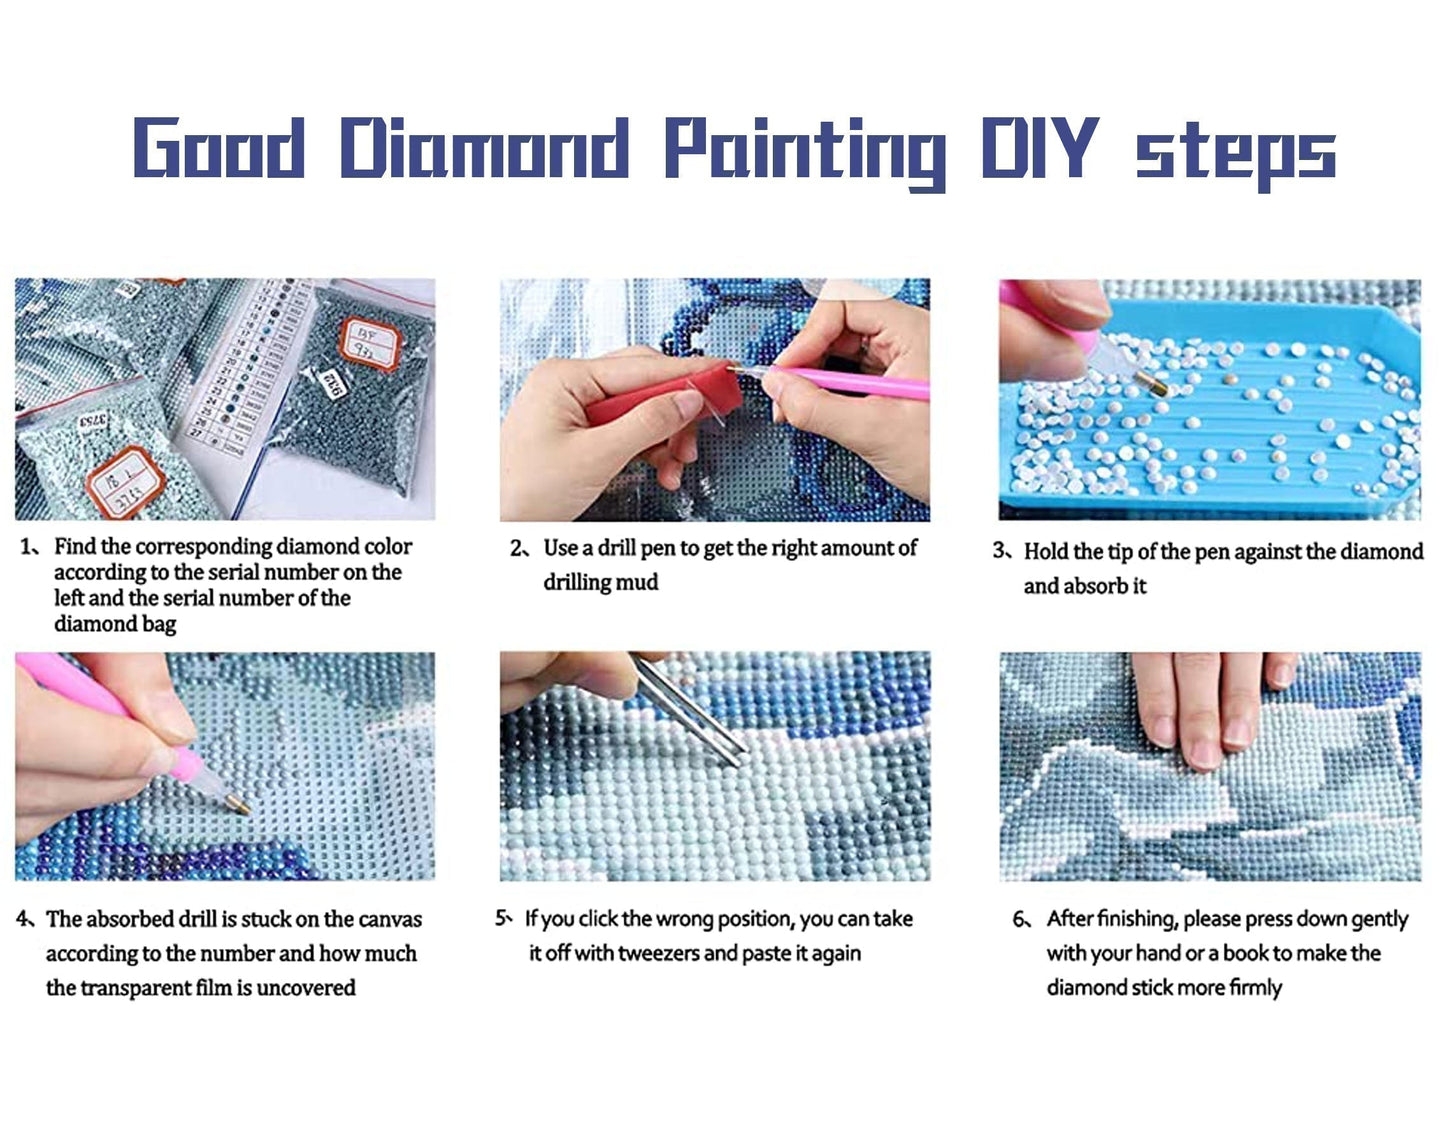 Full Round/Square Diamond Painting Kits | Dazzling Flower